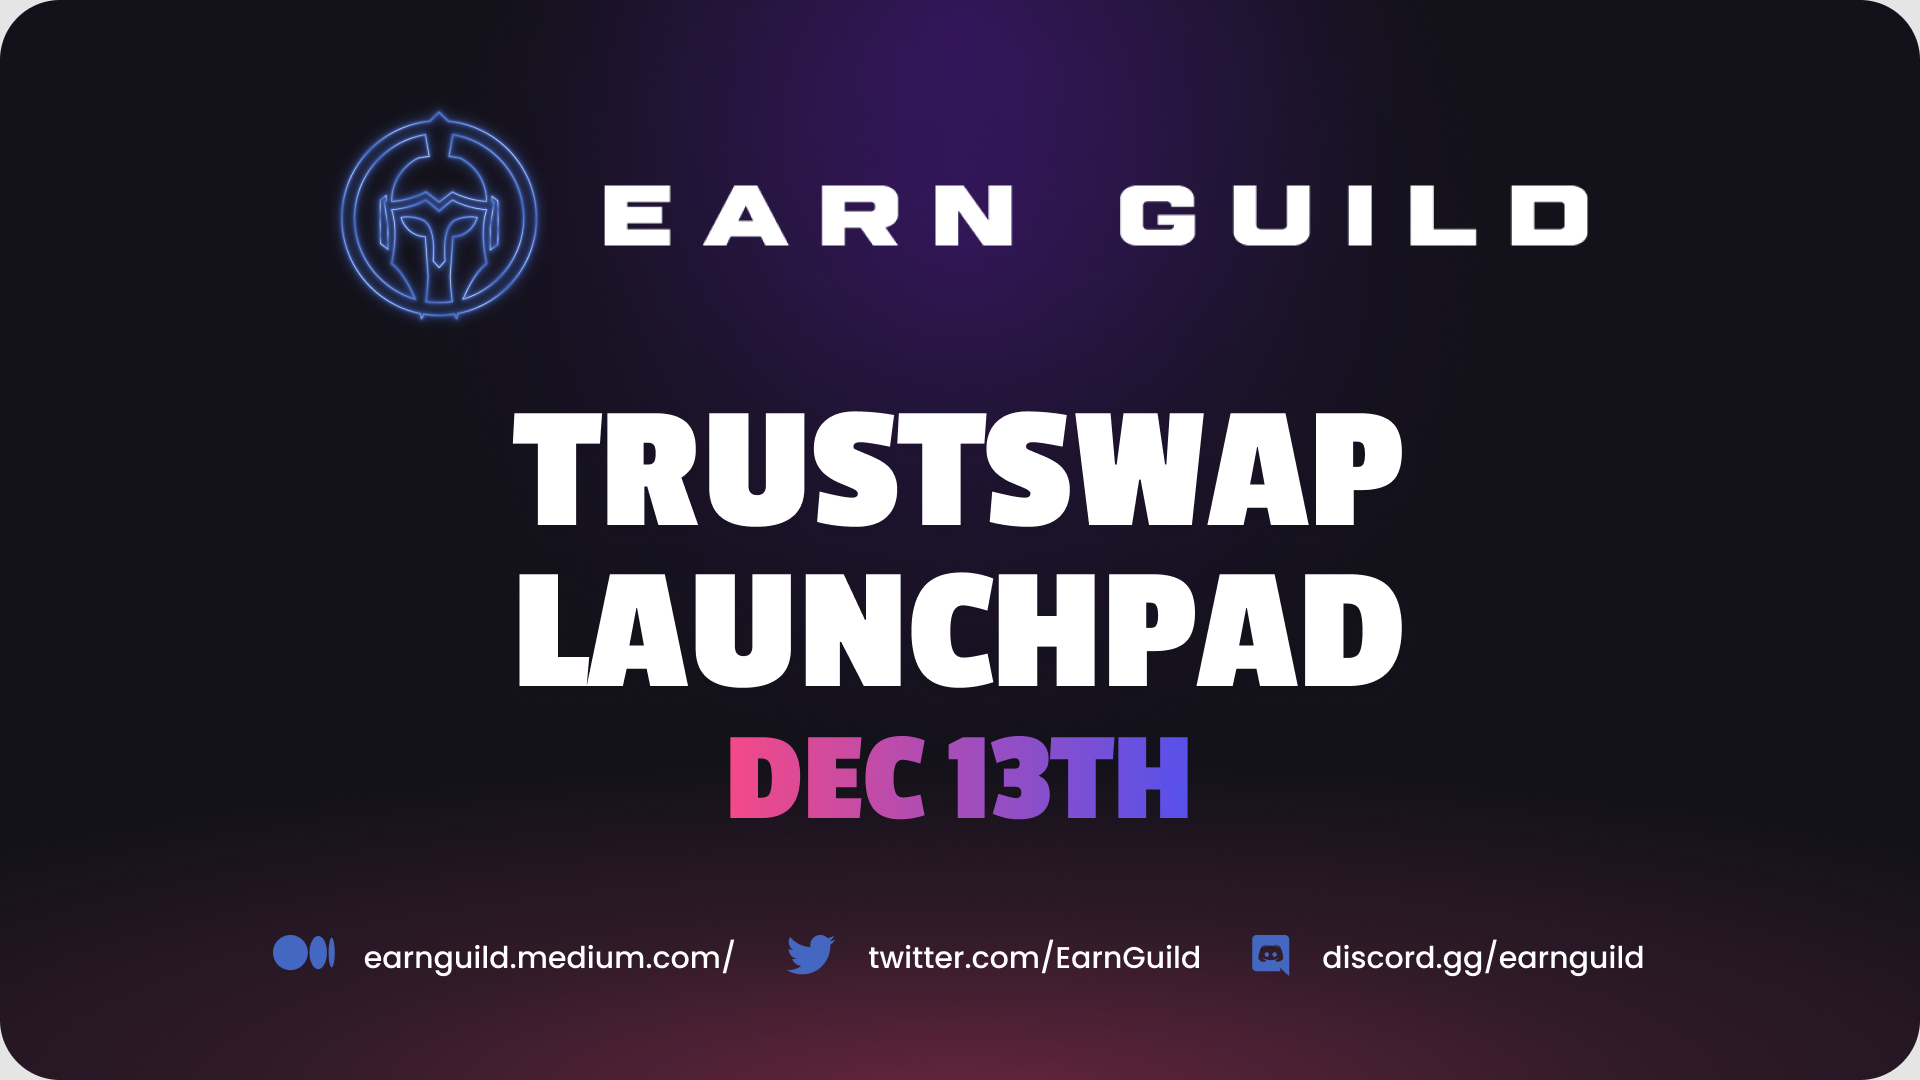 Earn Guild Announces Token Offering Dec. 13th on TrustSwap Launchpad